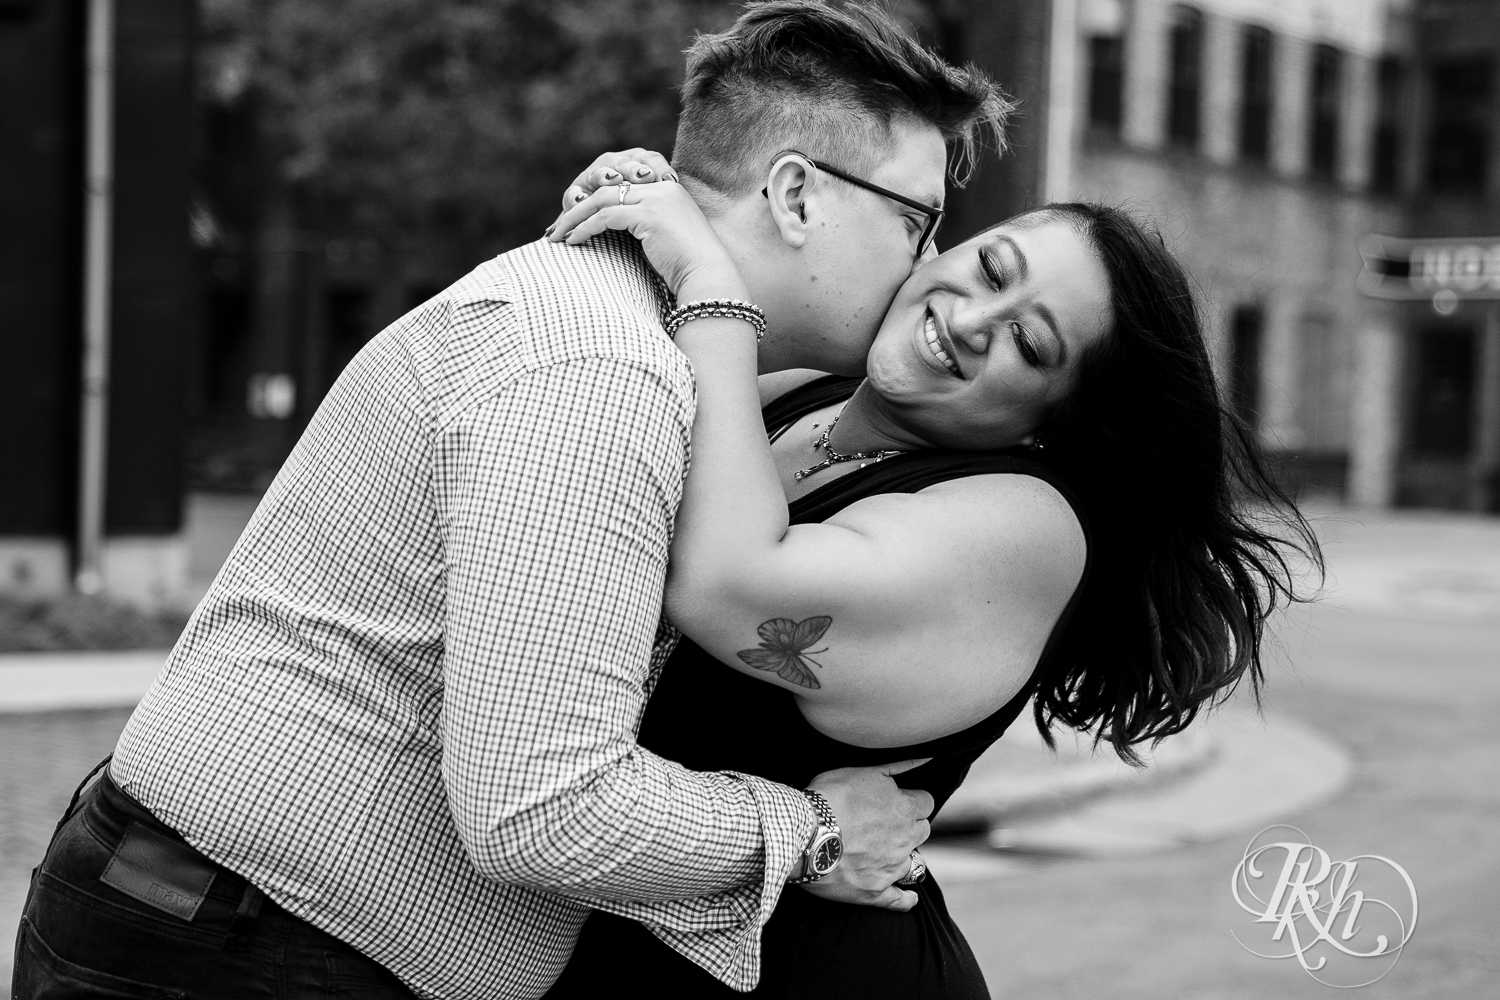 Man and Filipino woman kiss in street laughing in Minneapolis, Minnesota.